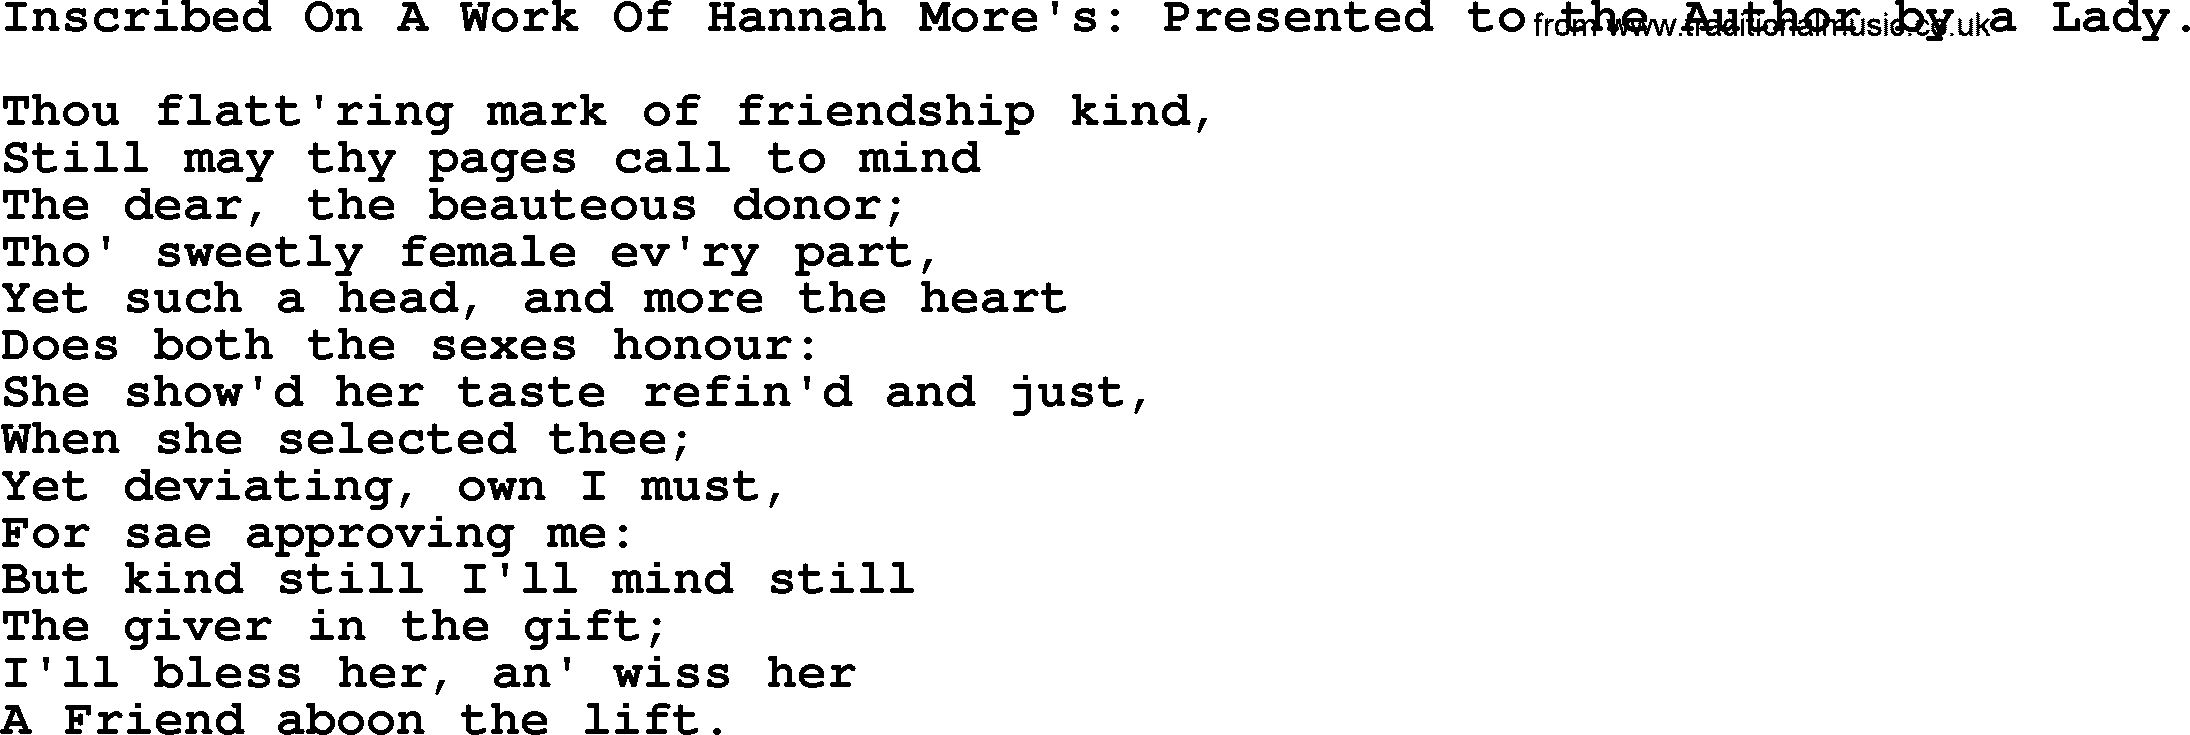 Robert Burns Songs & Lyrics: Inscribed On A Work Of Hannah More's